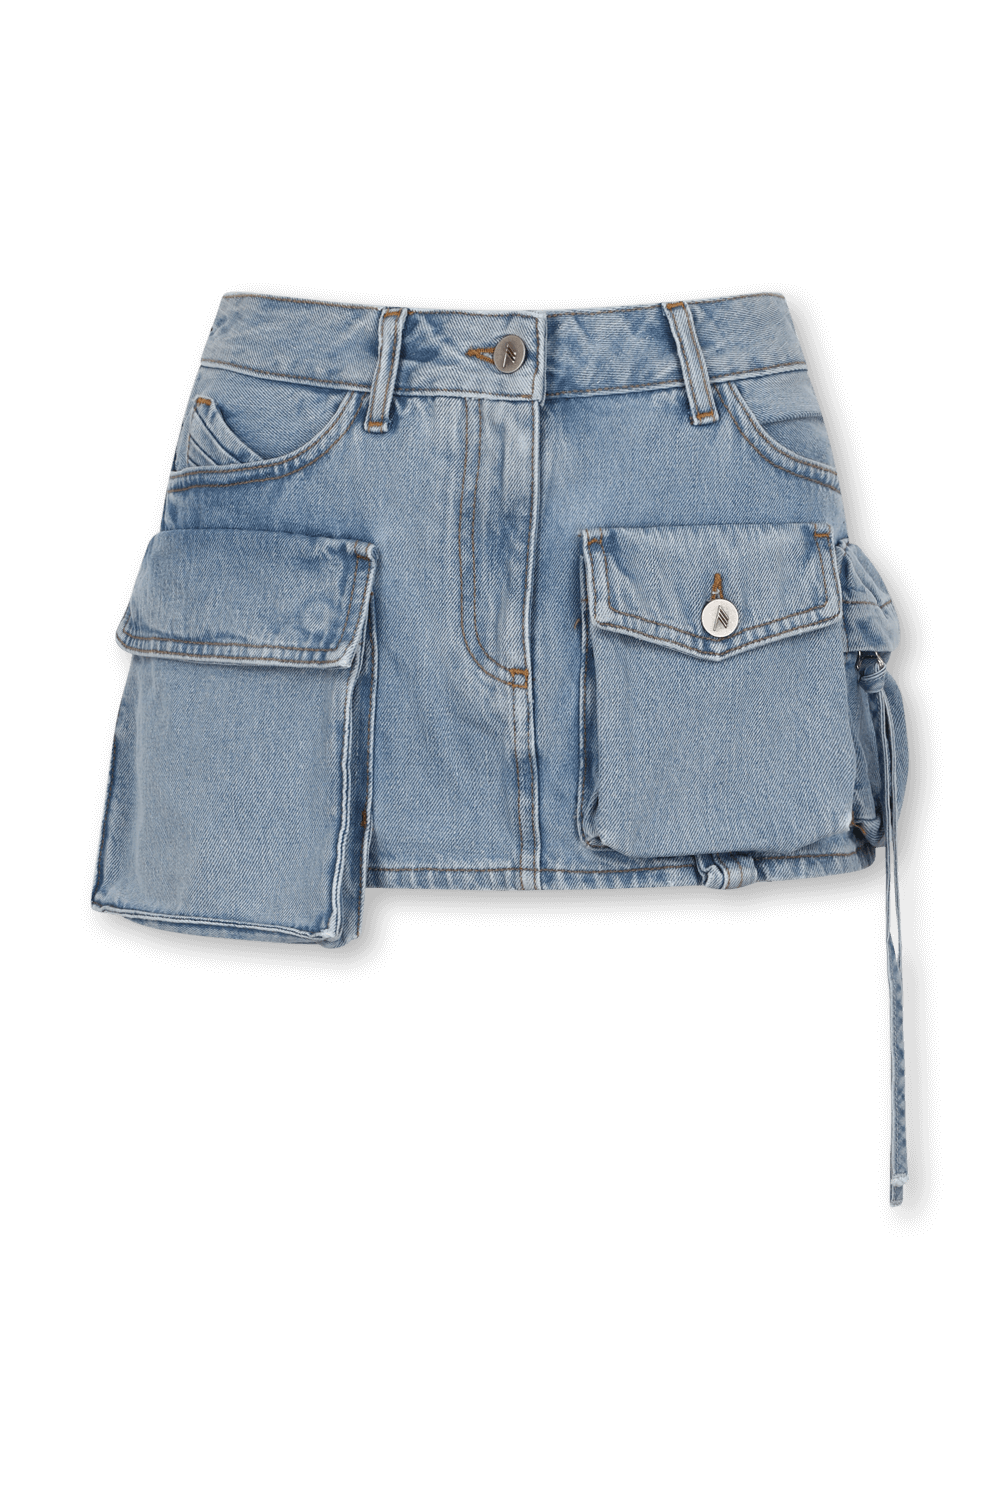 חצאית מיני ג'ינס פיי א-סימטרית THE ATTICO